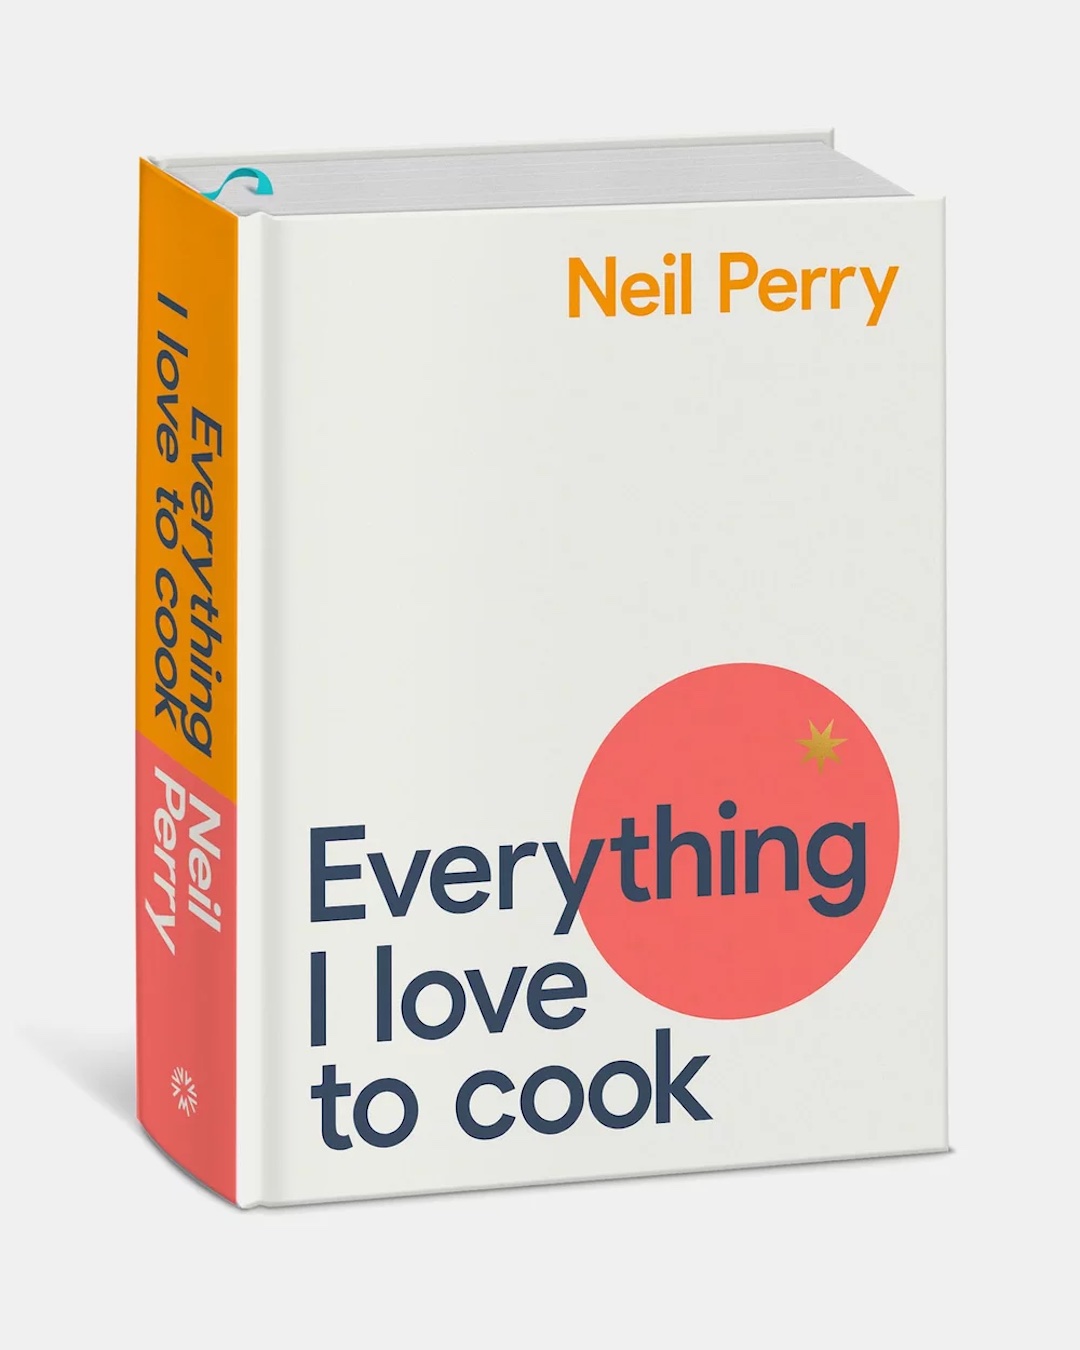 Housewarming gift ideas - Neil Perry cookbook